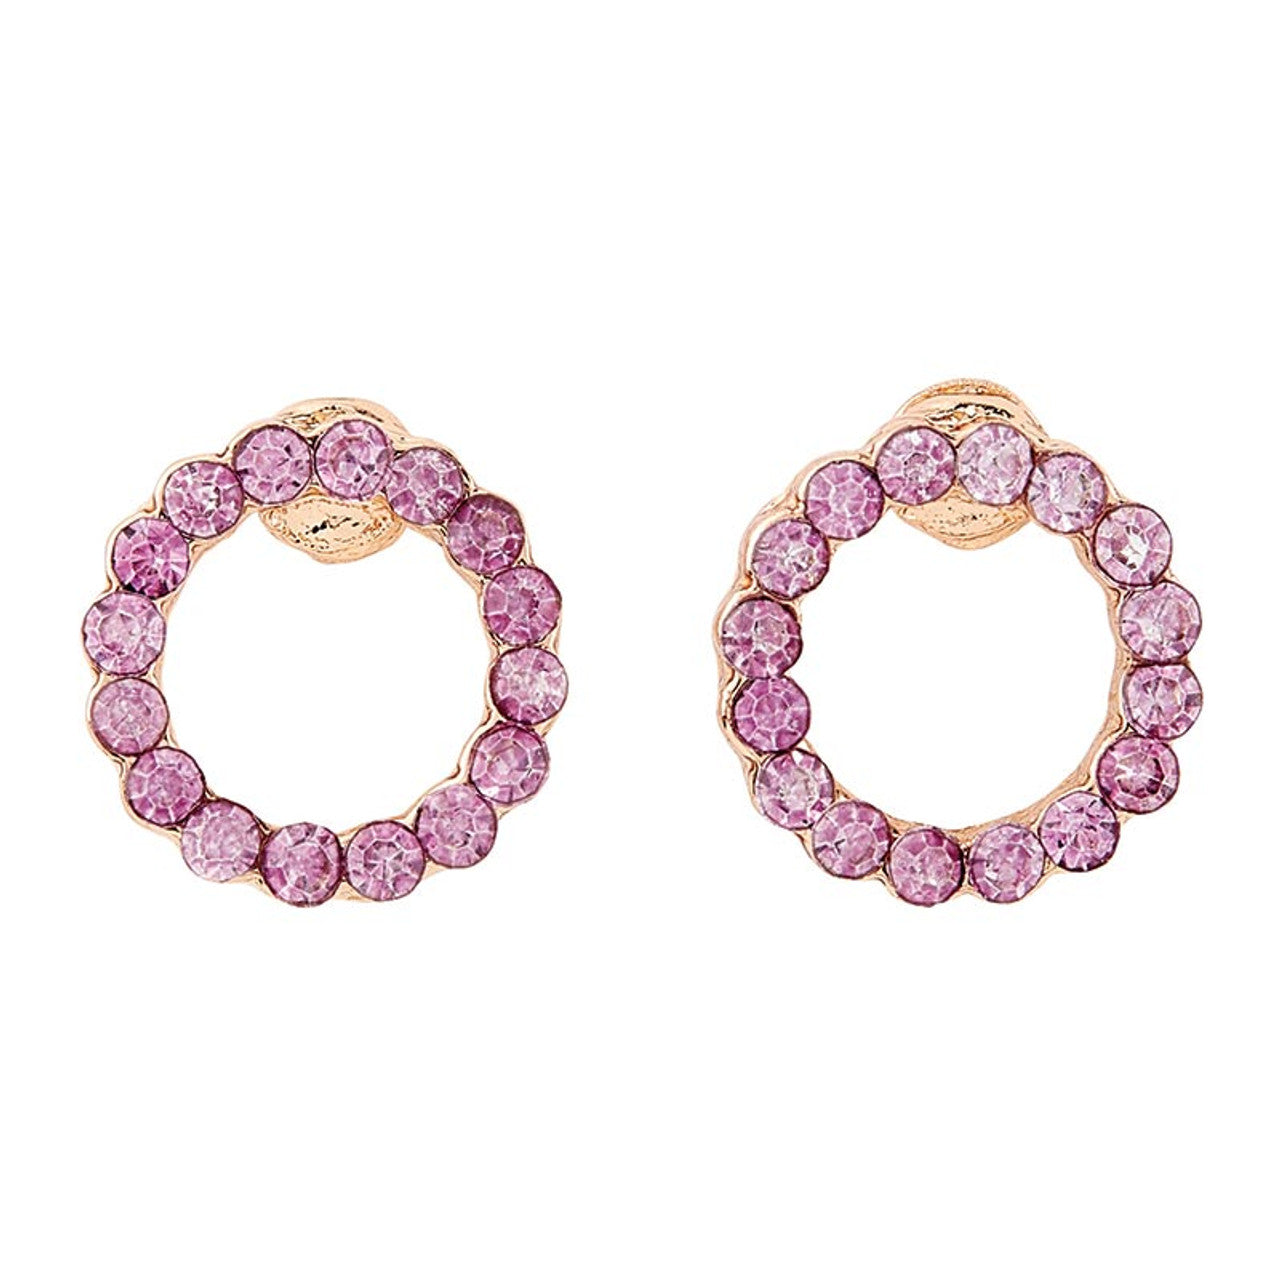 Sister Treasure Box Earrings | Flower Wreath-shaped Earrings | Giftable